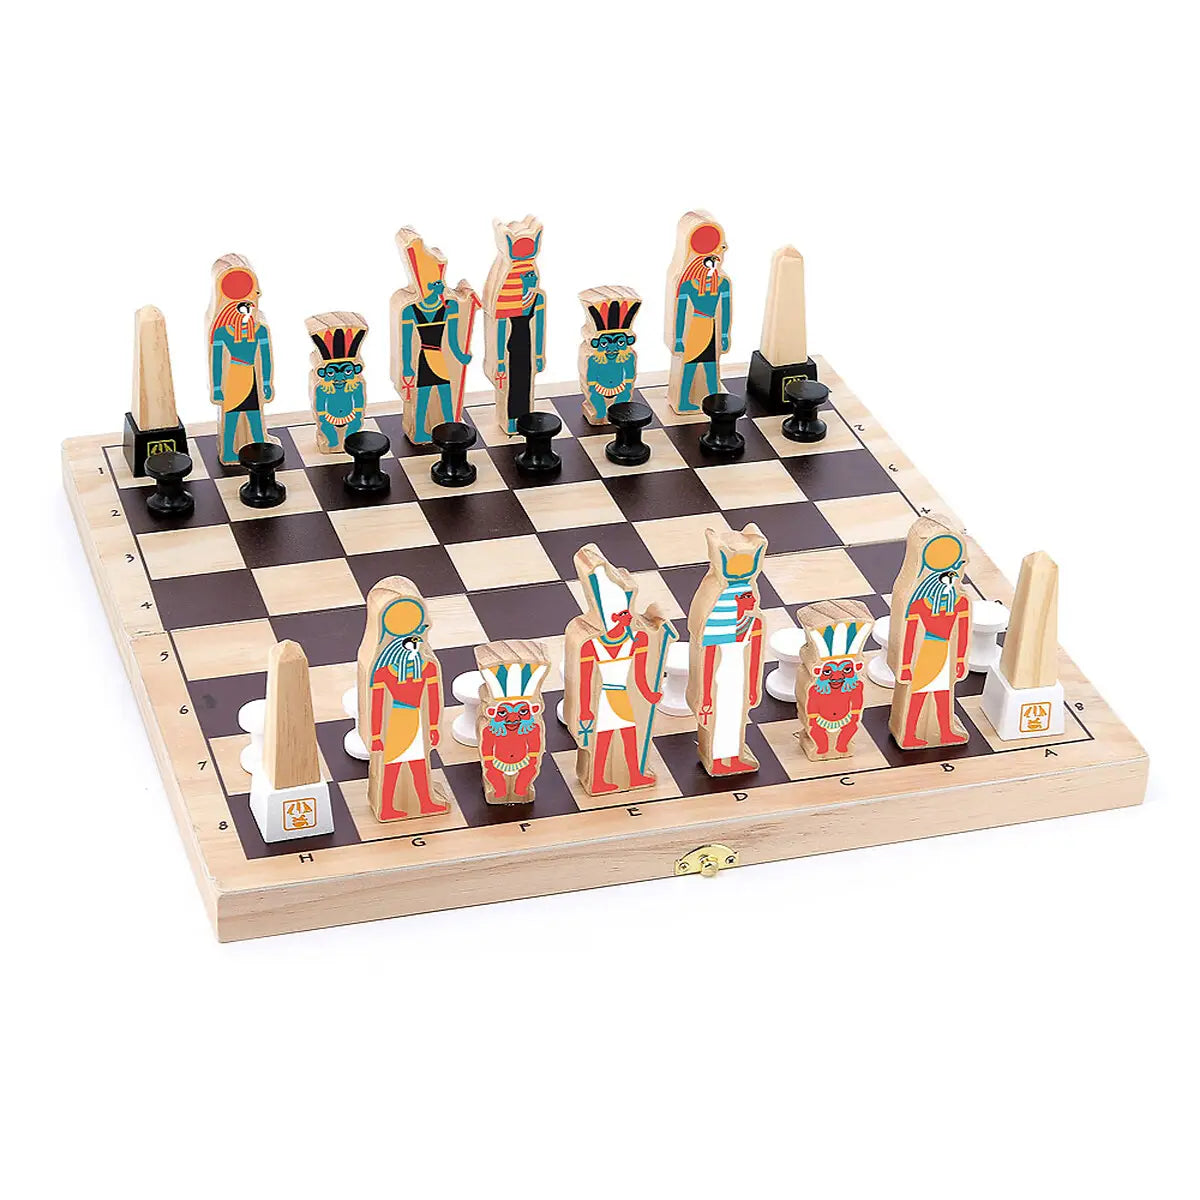 Louvre hieroglyphics chess